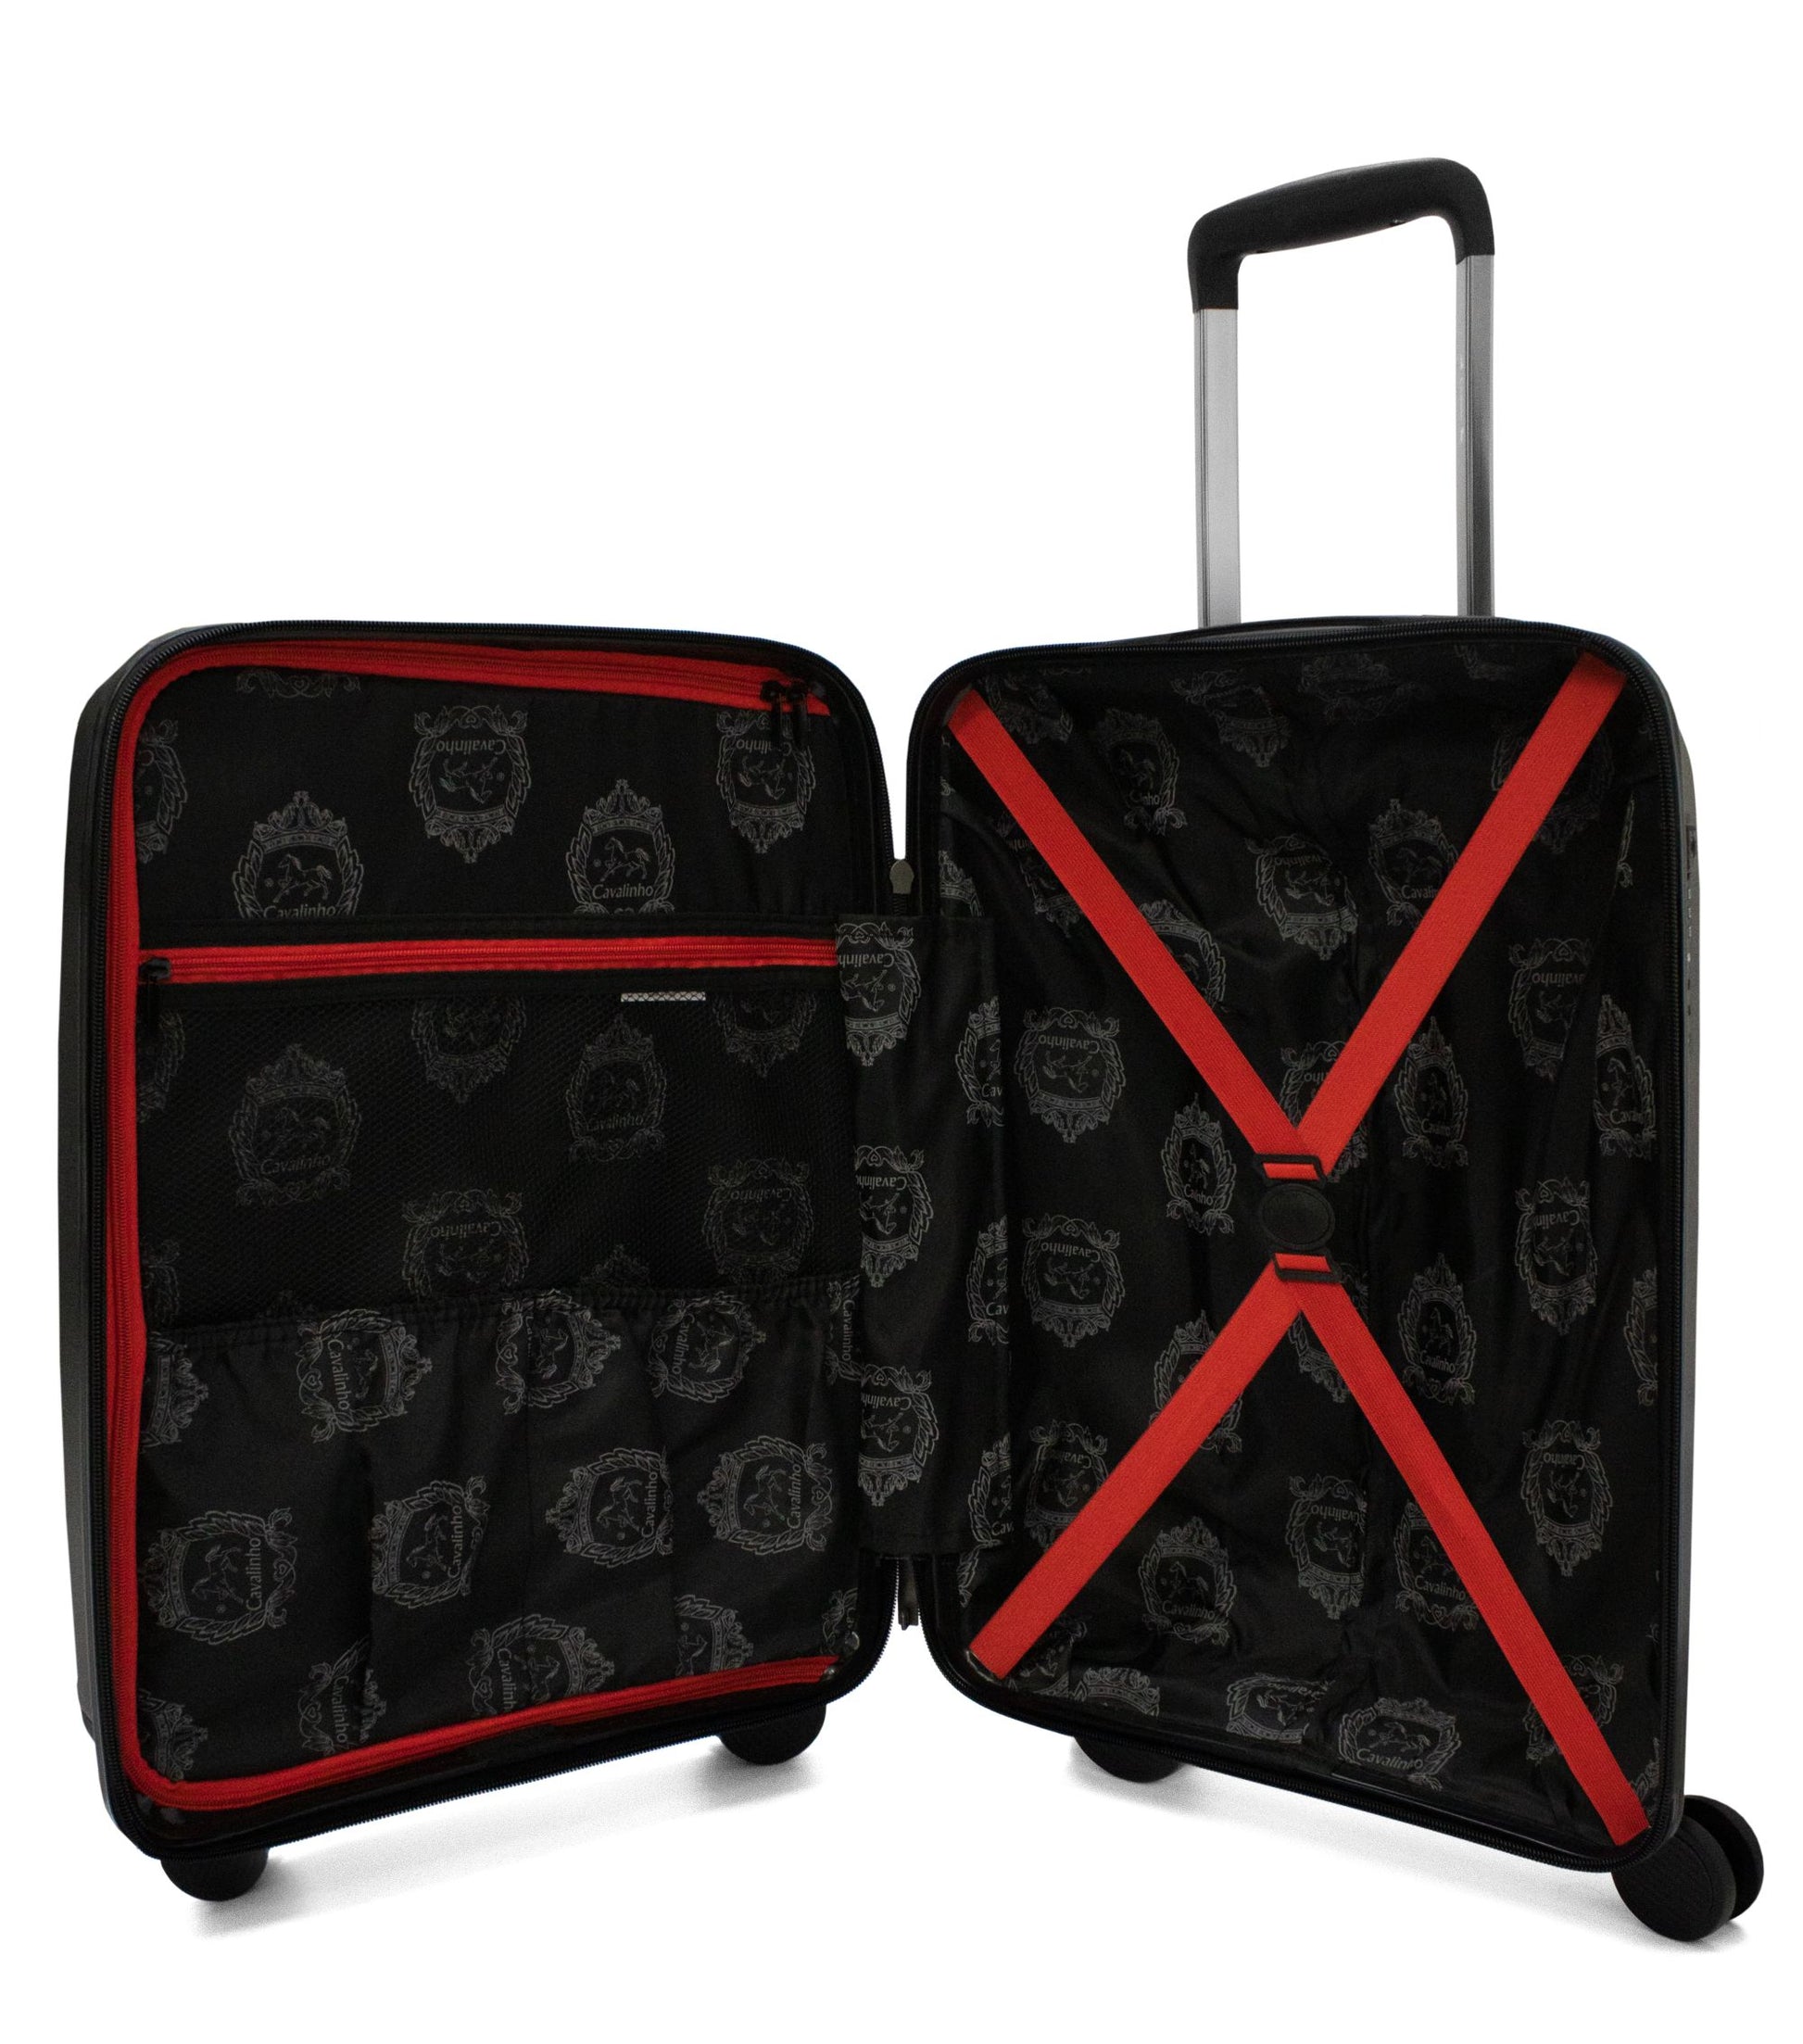 Cavalinho Colorful Carry-on Hardside Luggage (19") - 19 inch Black - 68020004.01.19_4